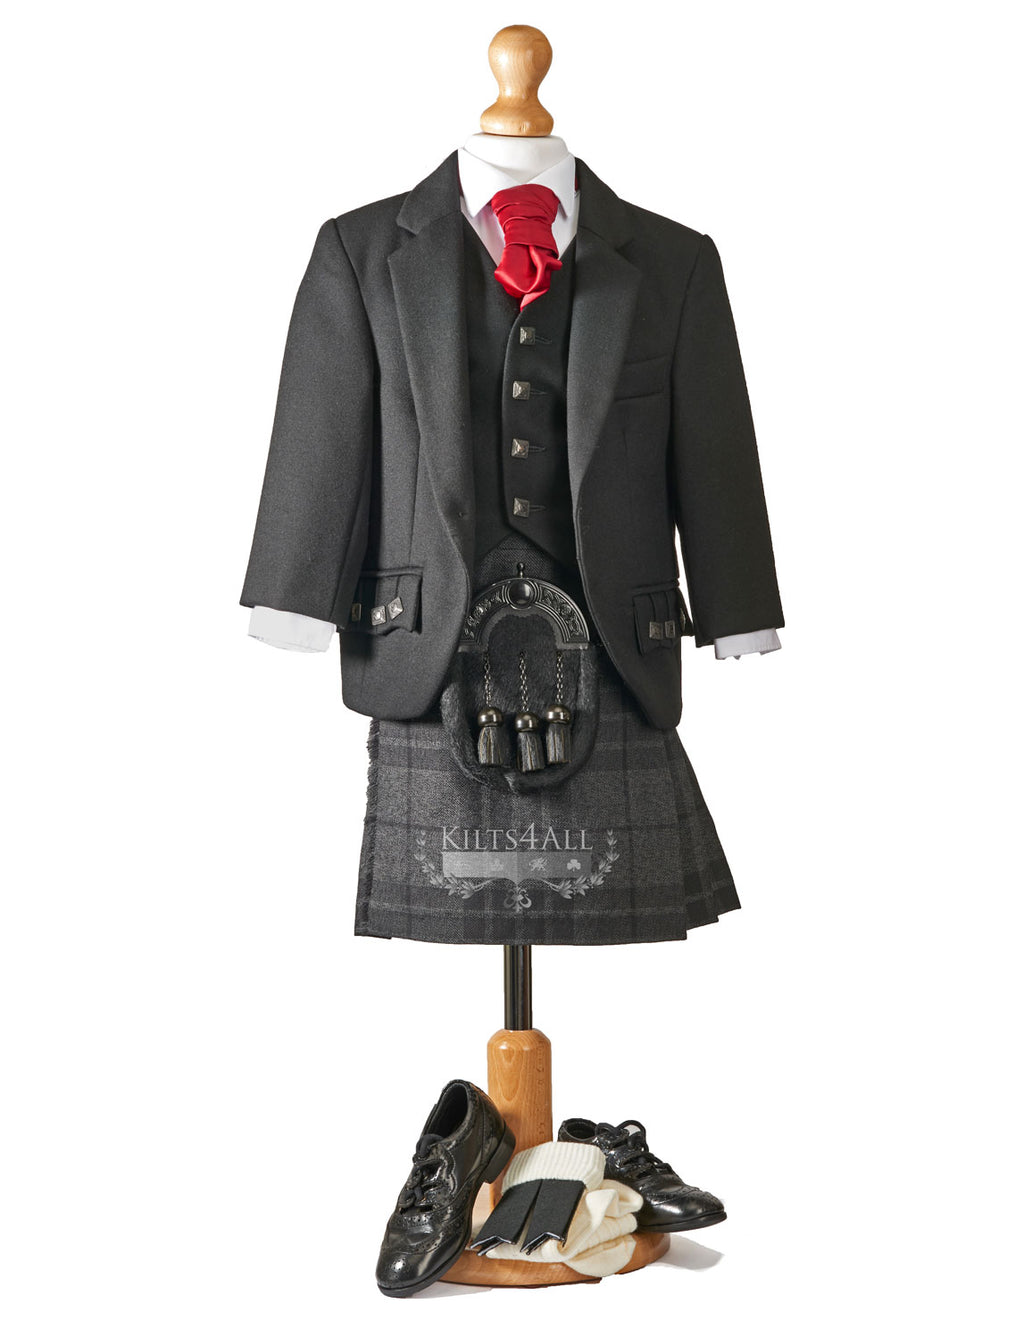 Boys Tartan Kilt Outfit to Hire - Muted Black Argyll Jacket & Waistcoat